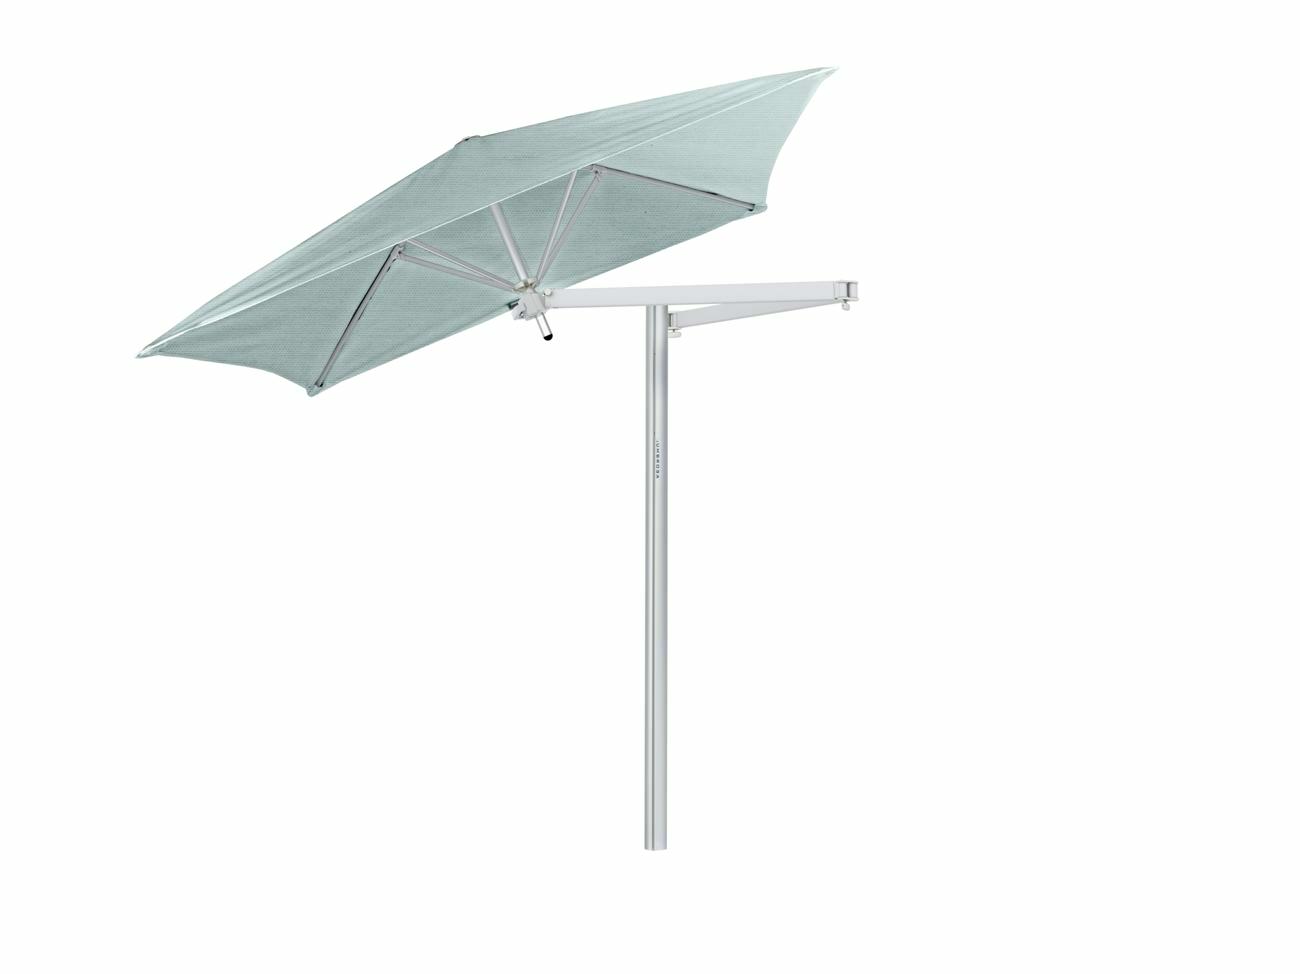 Paraflex cantilever umbrella square 1,9 m with Curacao fabric and a Neo arm